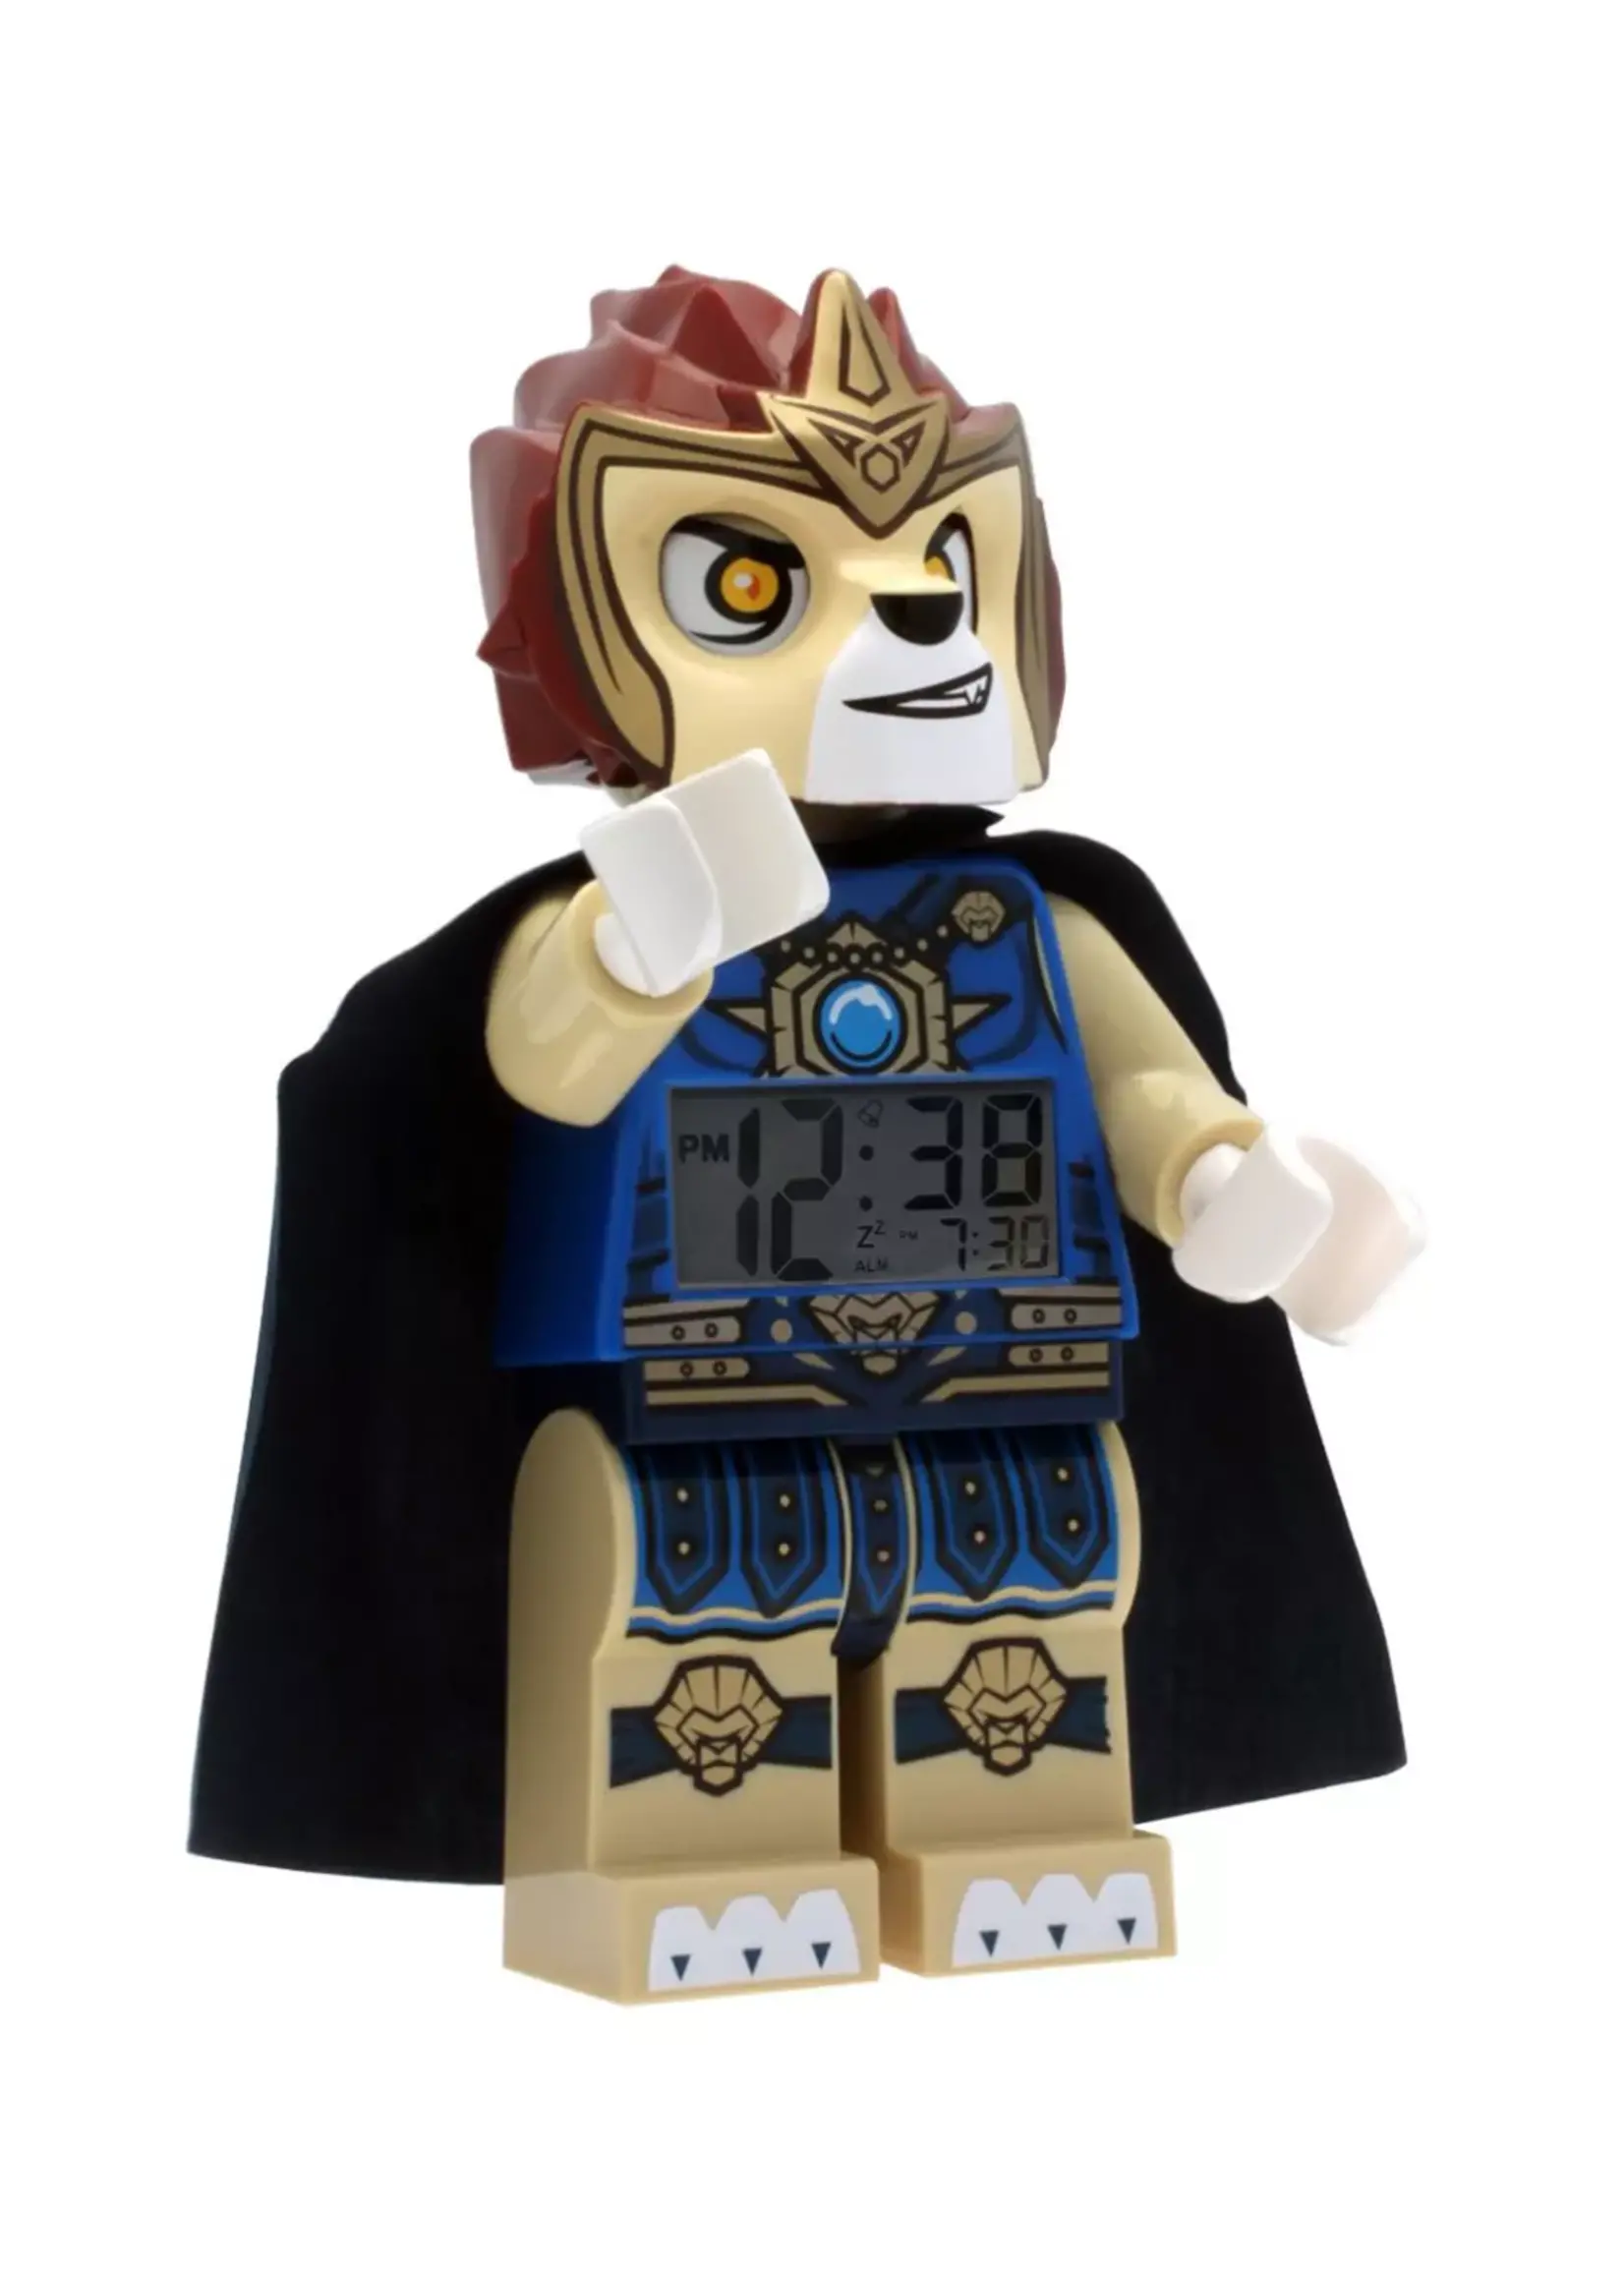 Chima Clock Alarm Lego